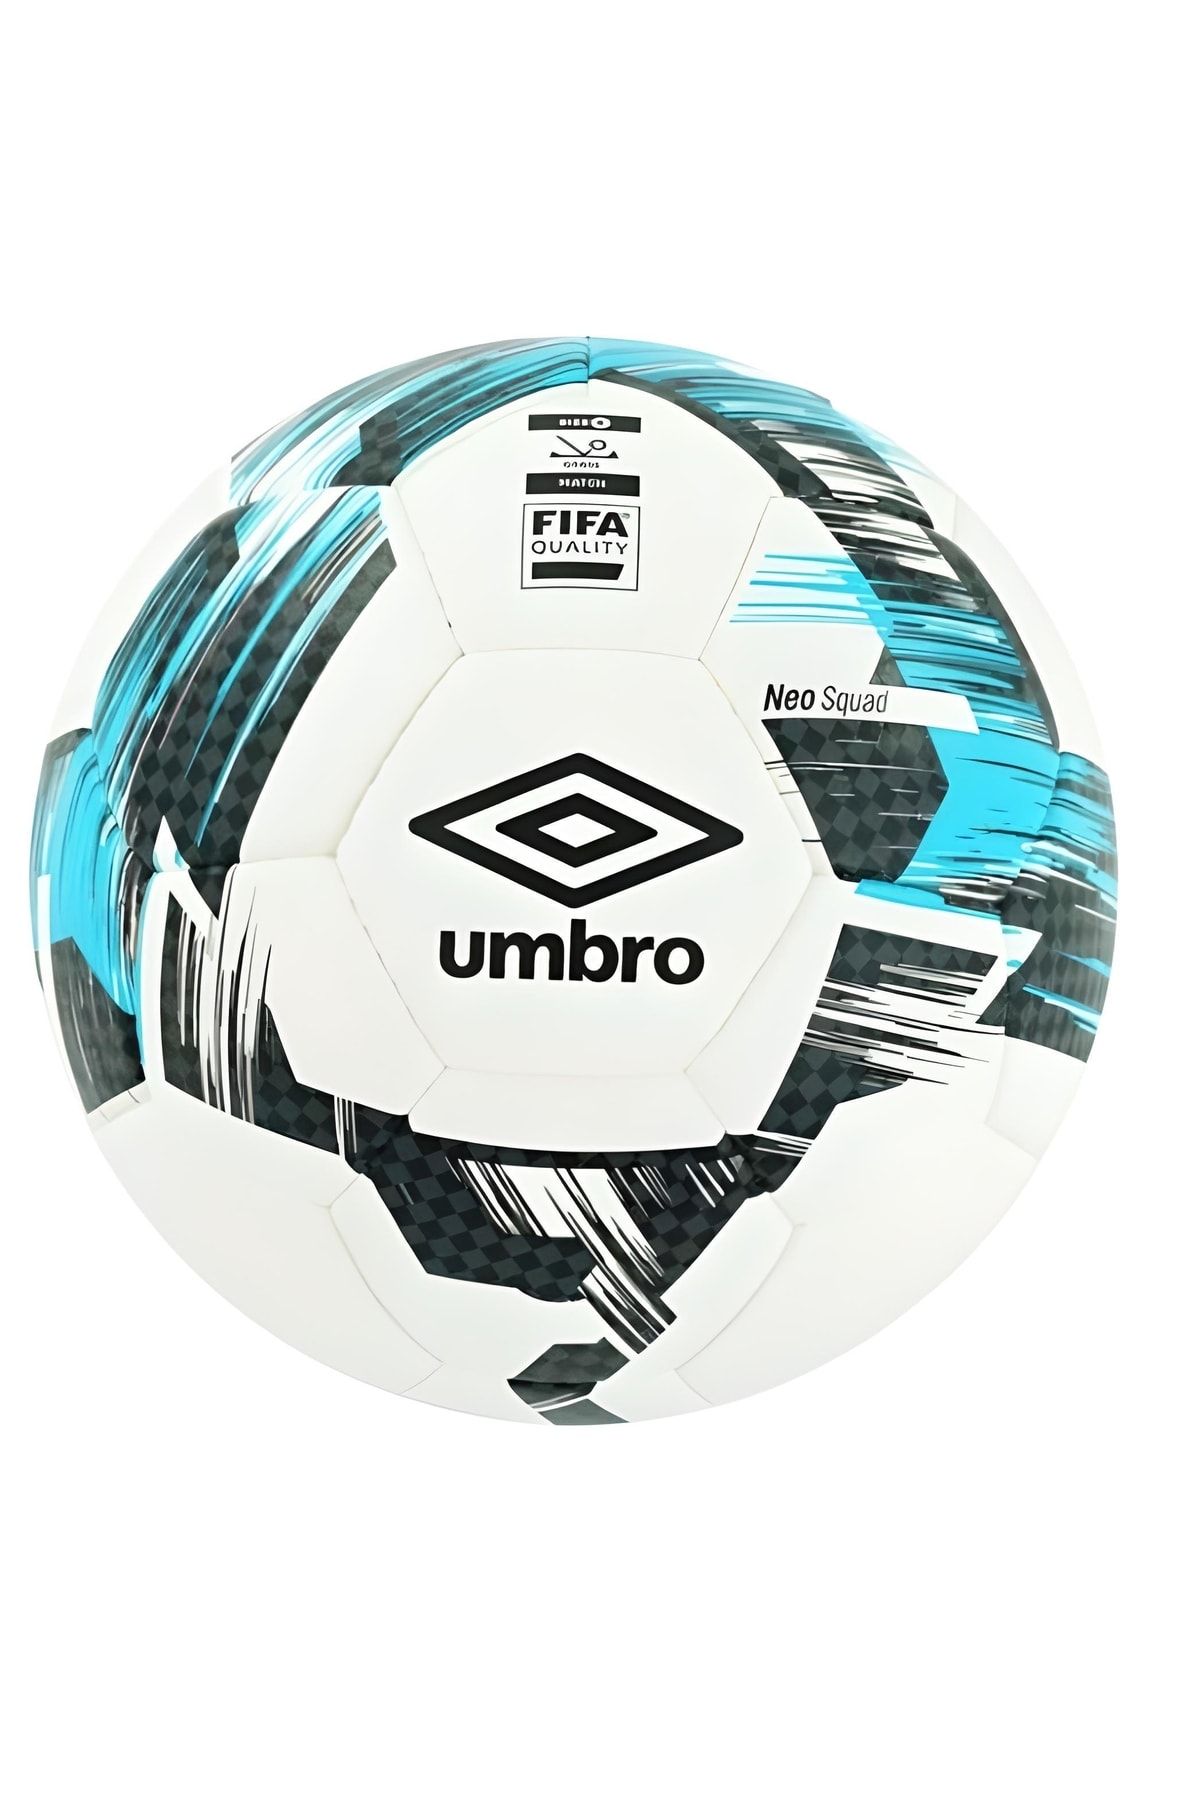 Umbro 26548u Neo Squad Fıfa Onaylı 4 No Dikişli Futbol Topu Mavi